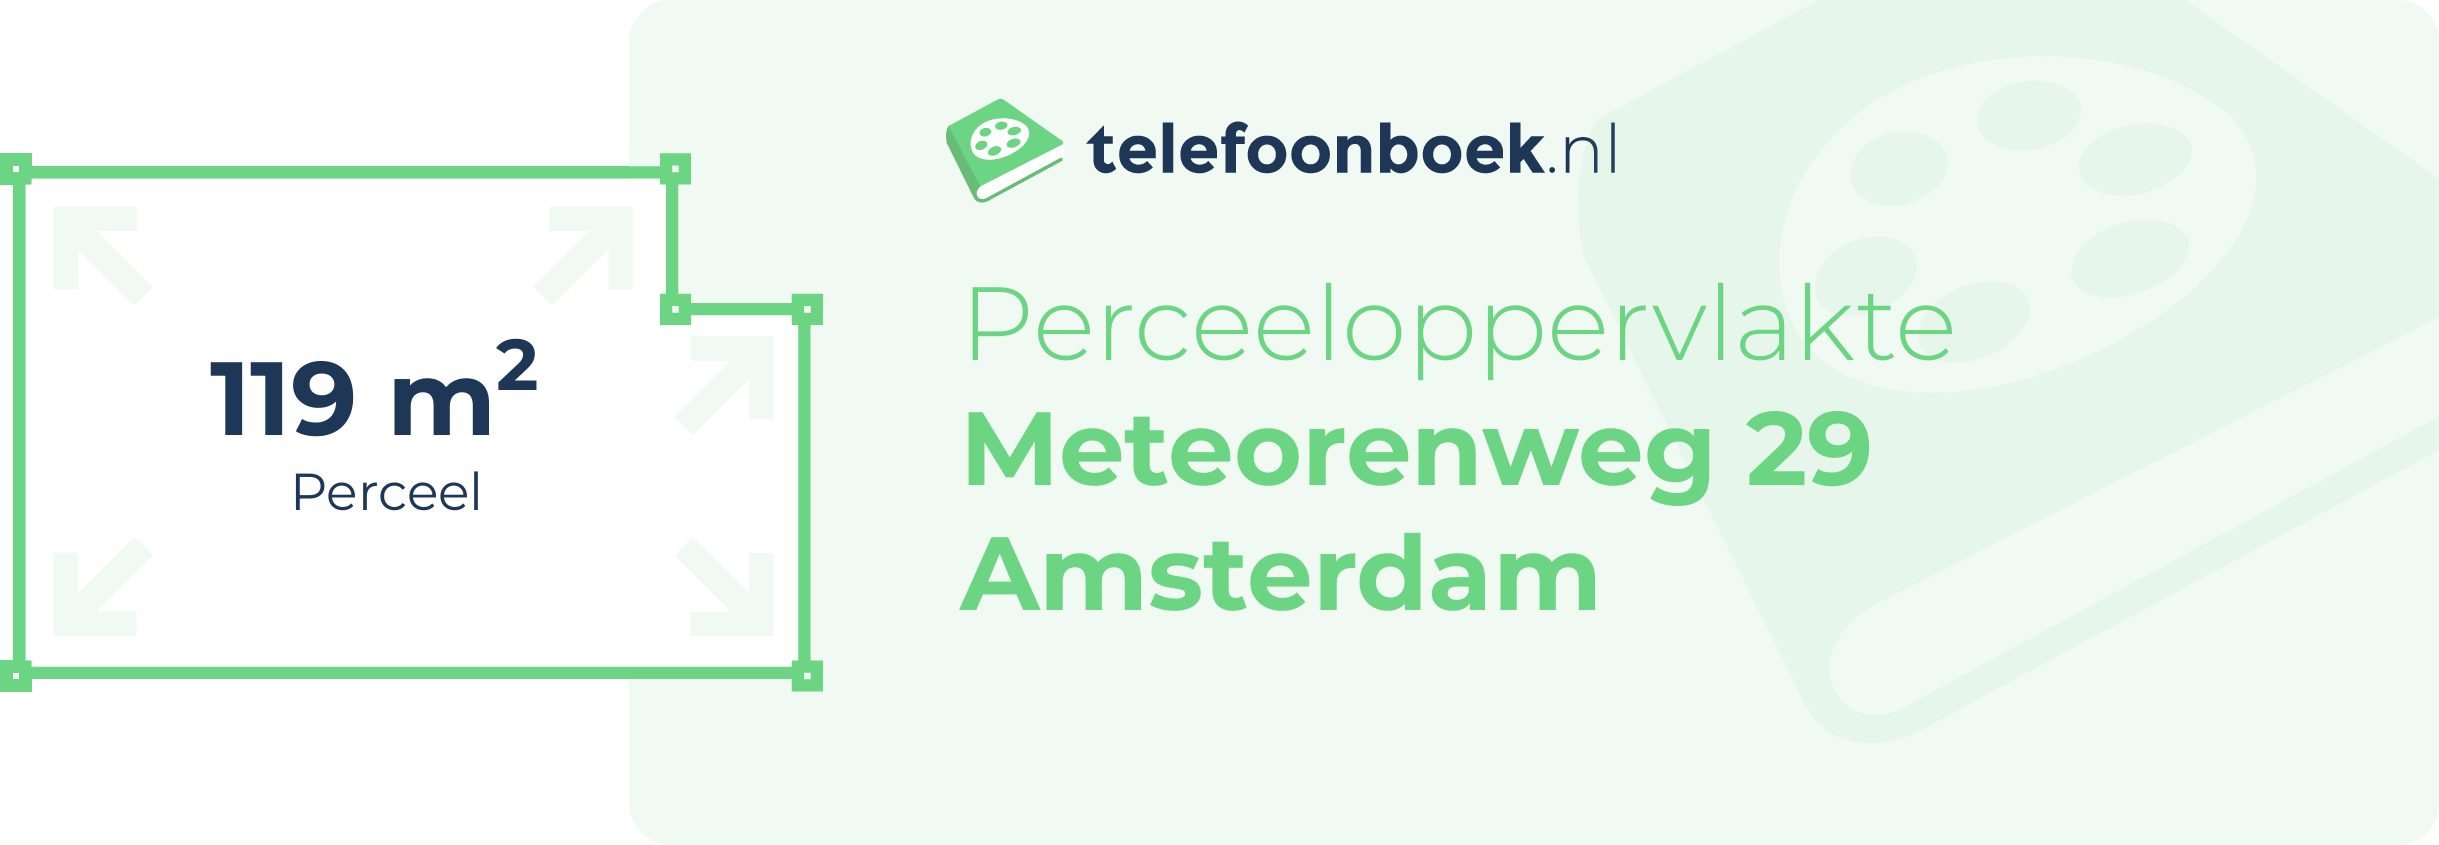 Perceeloppervlakte Meteorenweg 29 Amsterdam